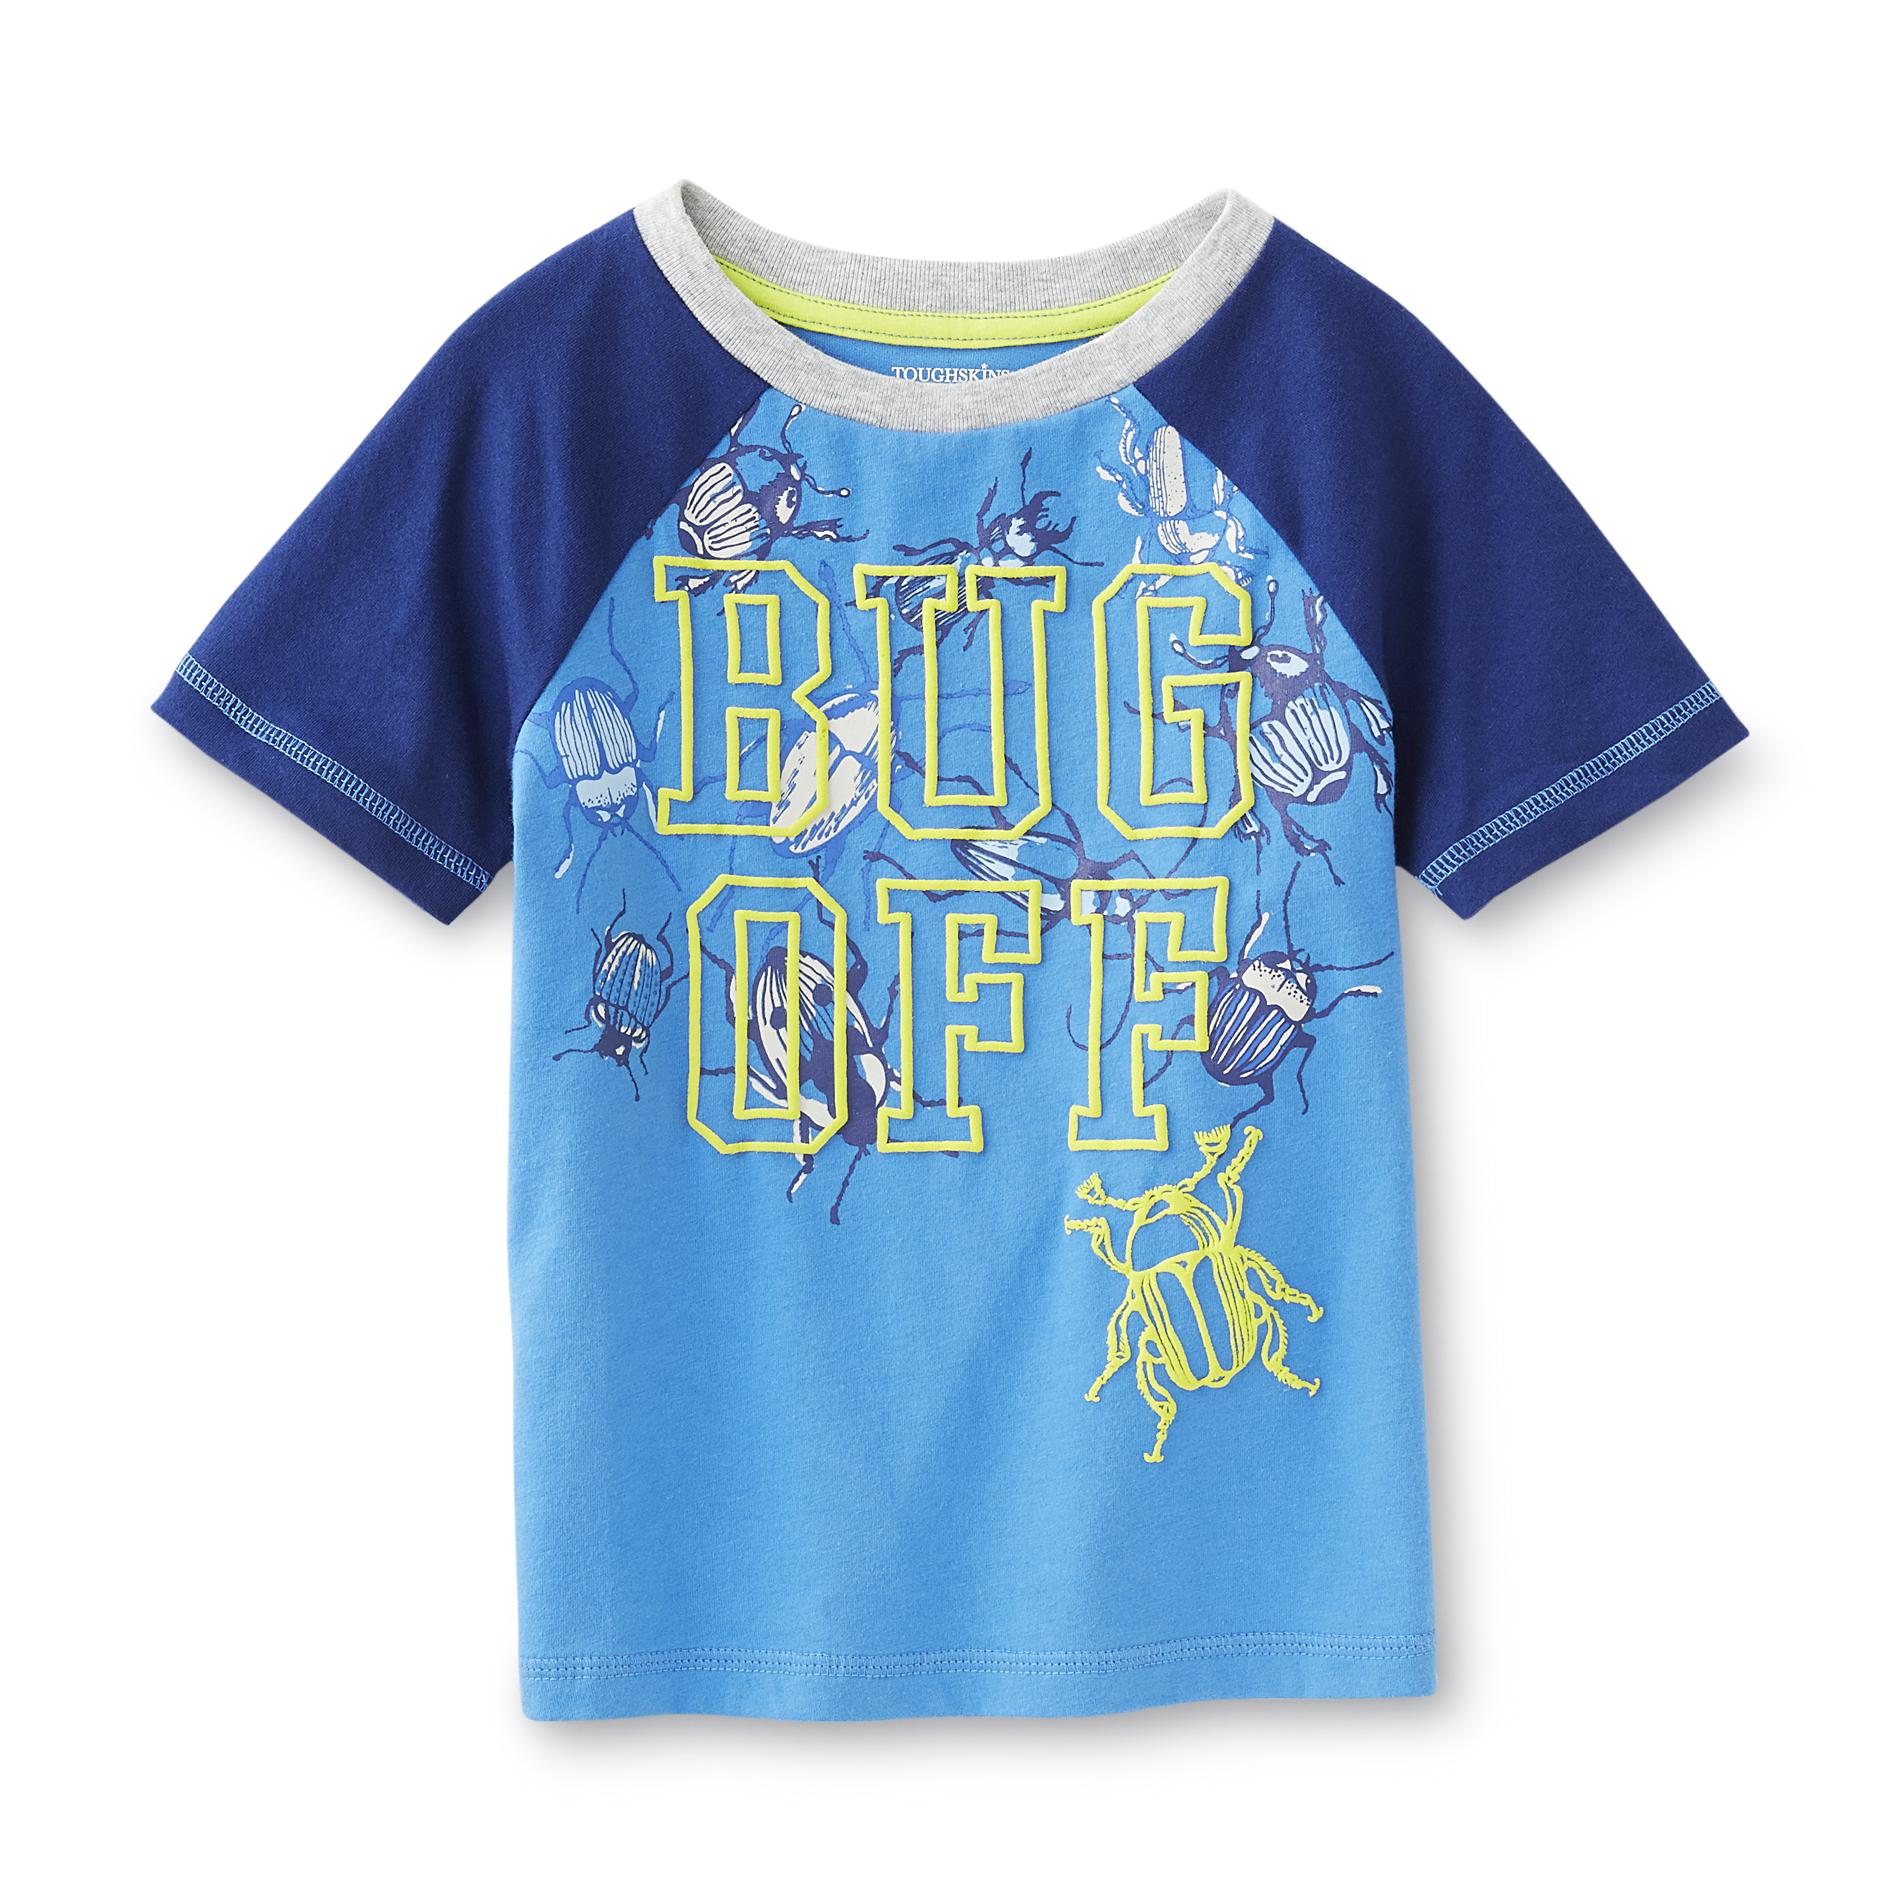 Boy's Graphic T-Shirt - Bug Off